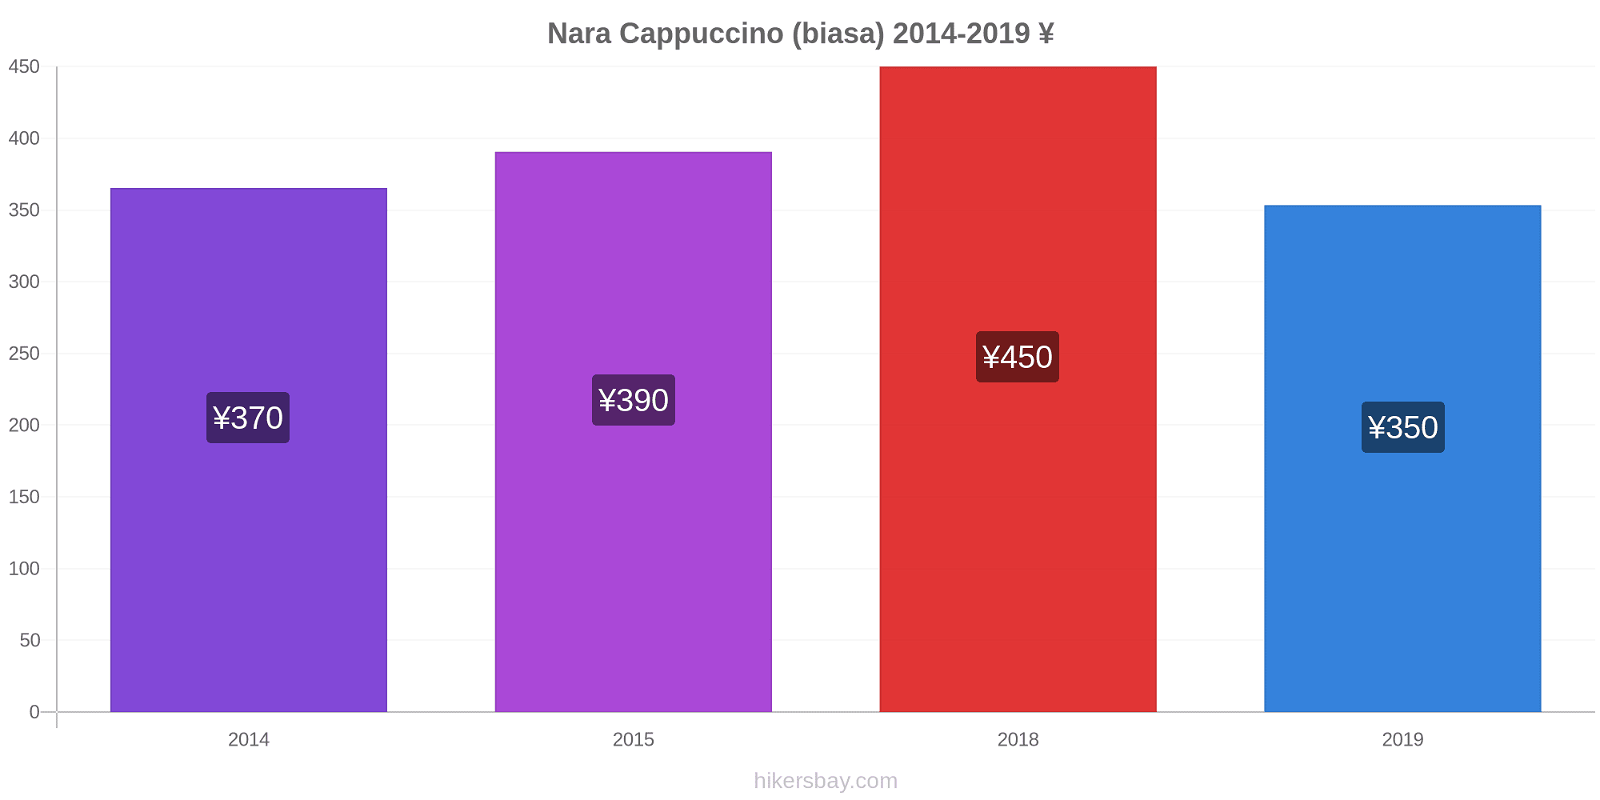 Nara perubahan harga Cappuccino (biasa) hikersbay.com